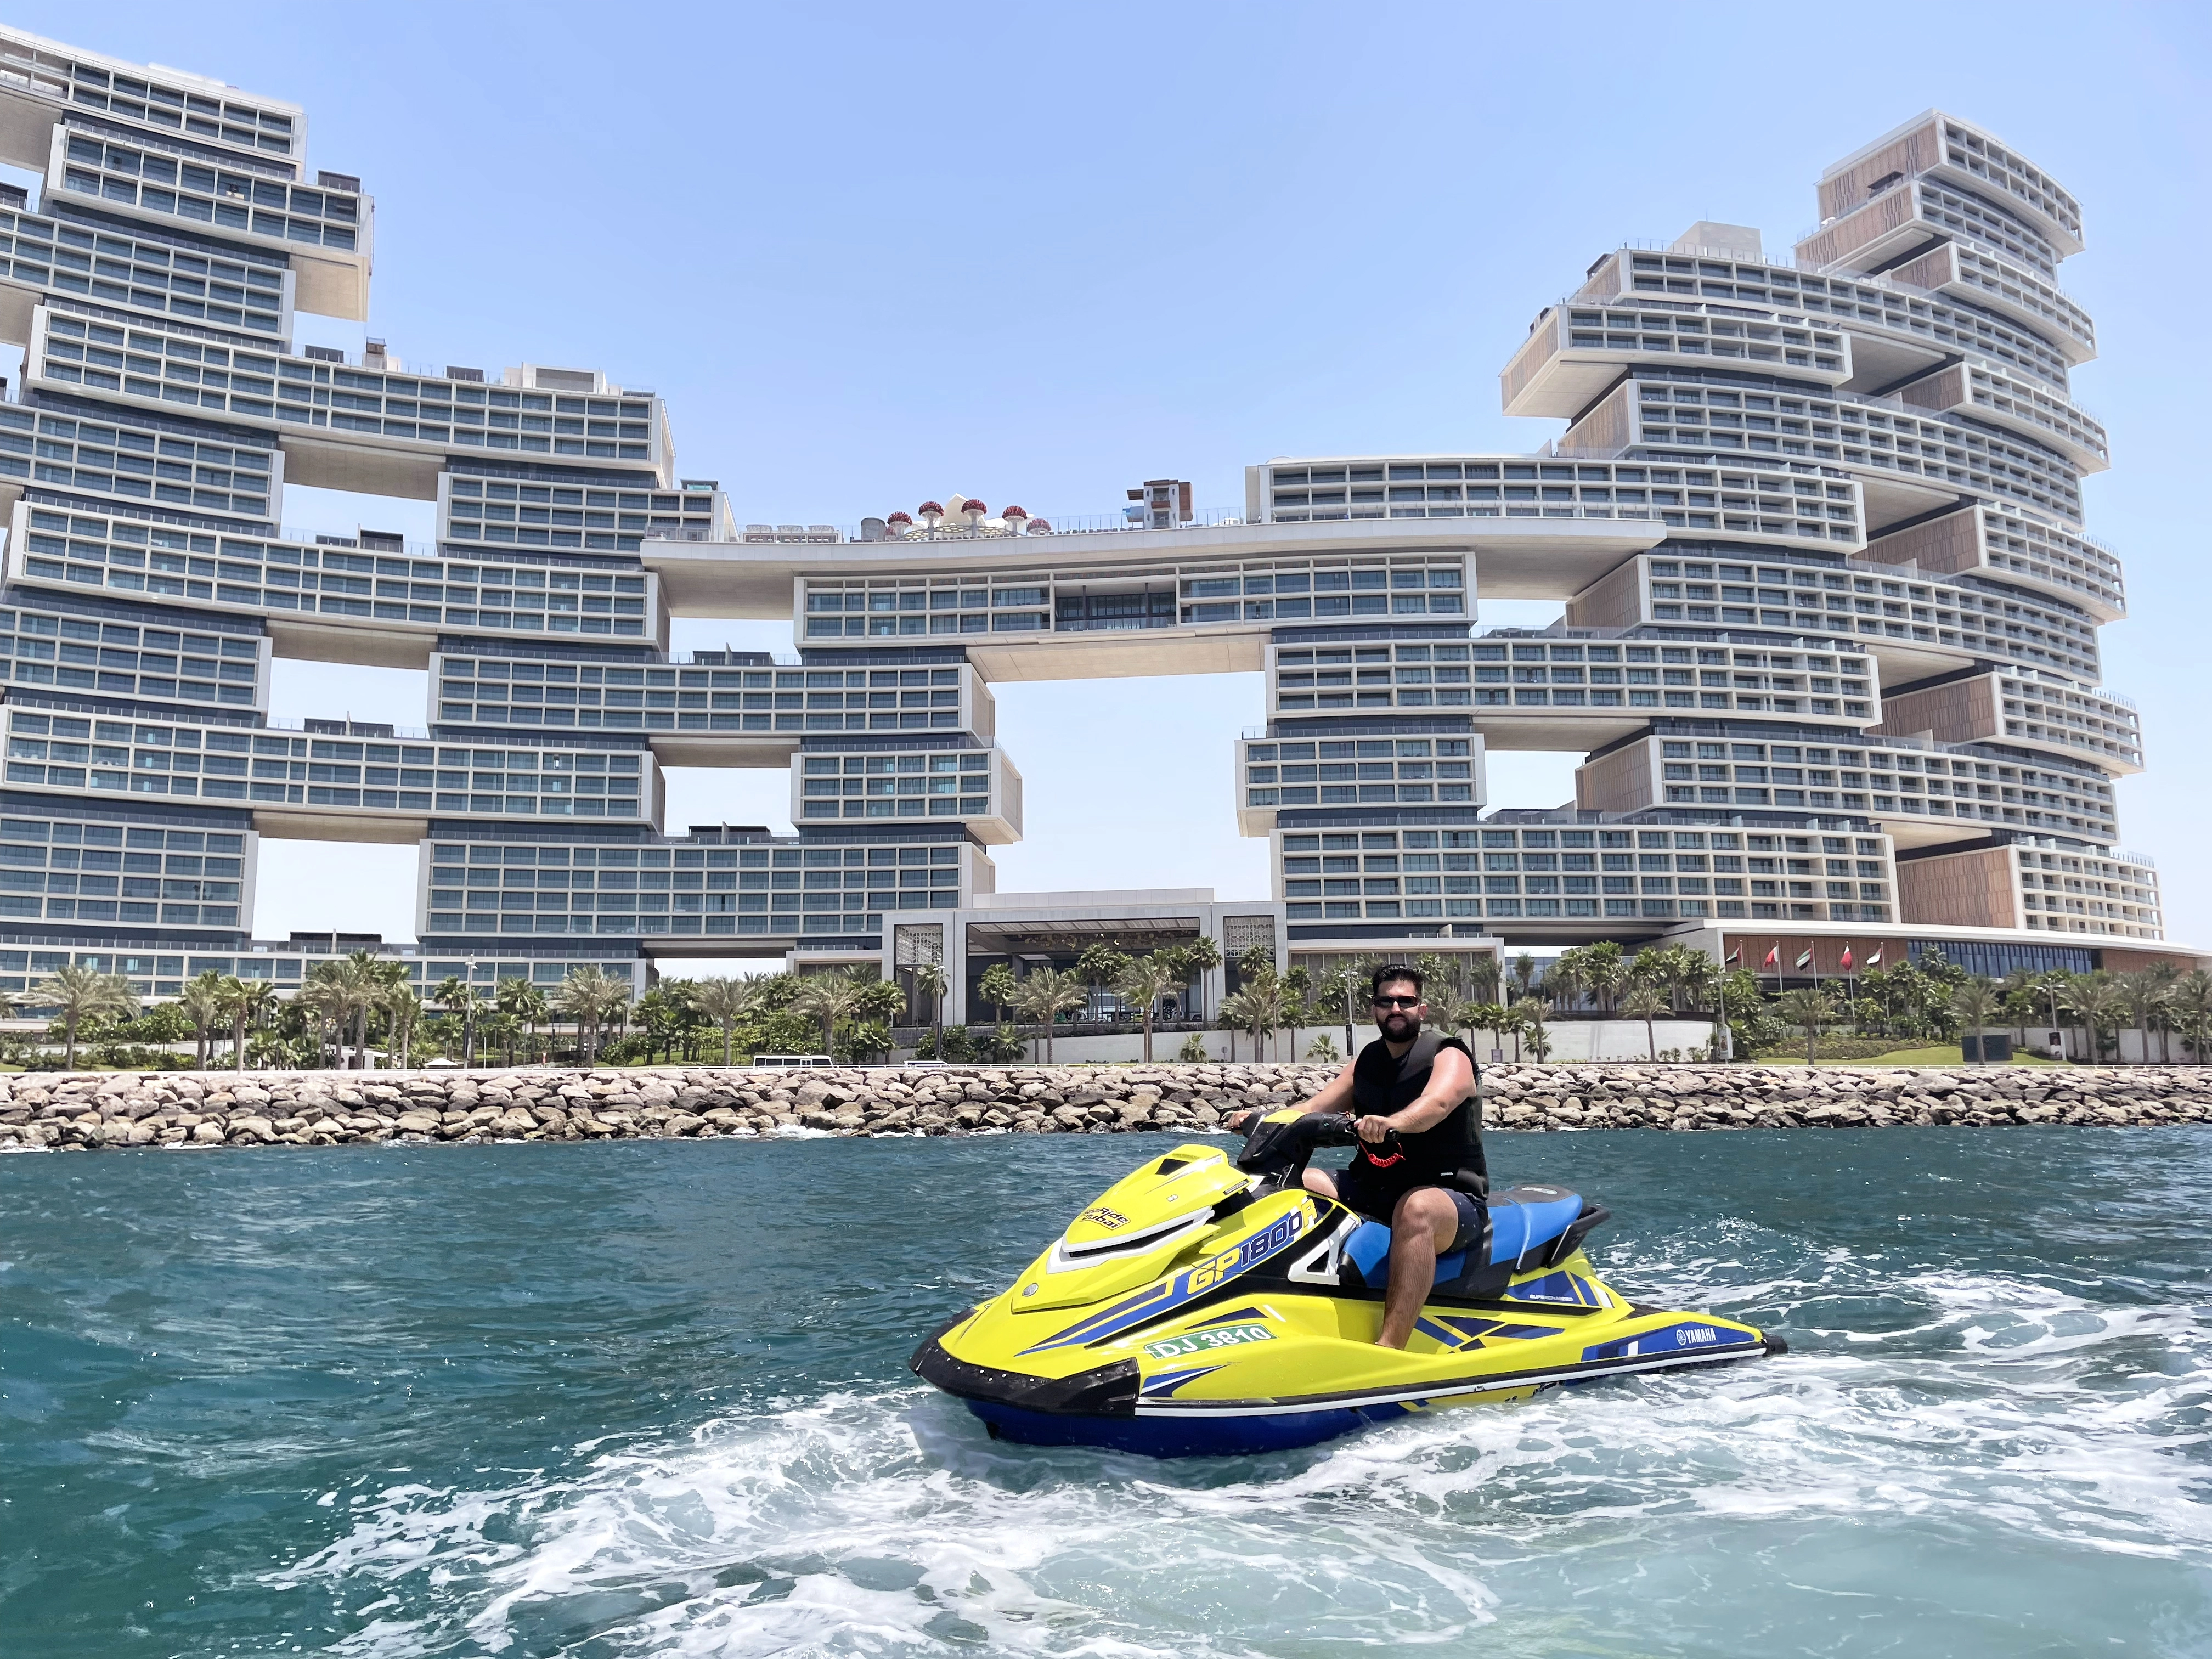 a man posing for a jetski dubai experience in front of The Royal Atlantis Hotel in Dubai